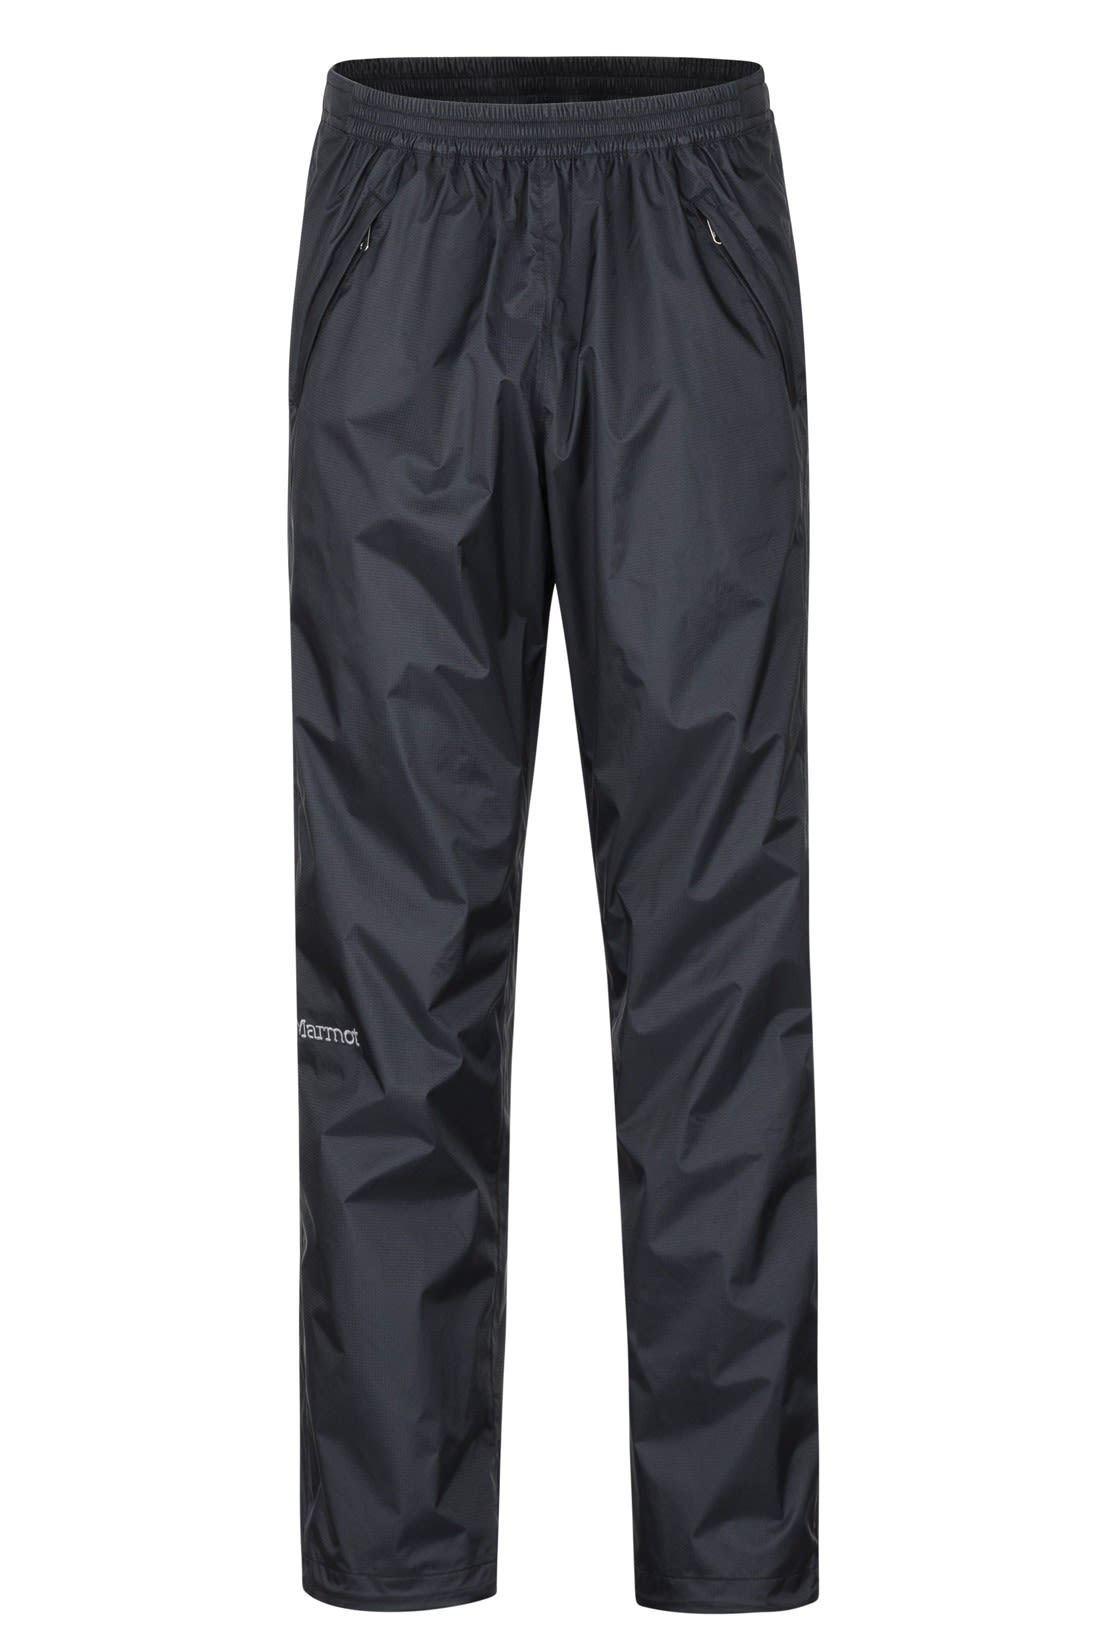 Marmot Precip ECO Full Zip Pant Schwarz- Male Jogginghosen- Grsse L - Long - Farbe Black